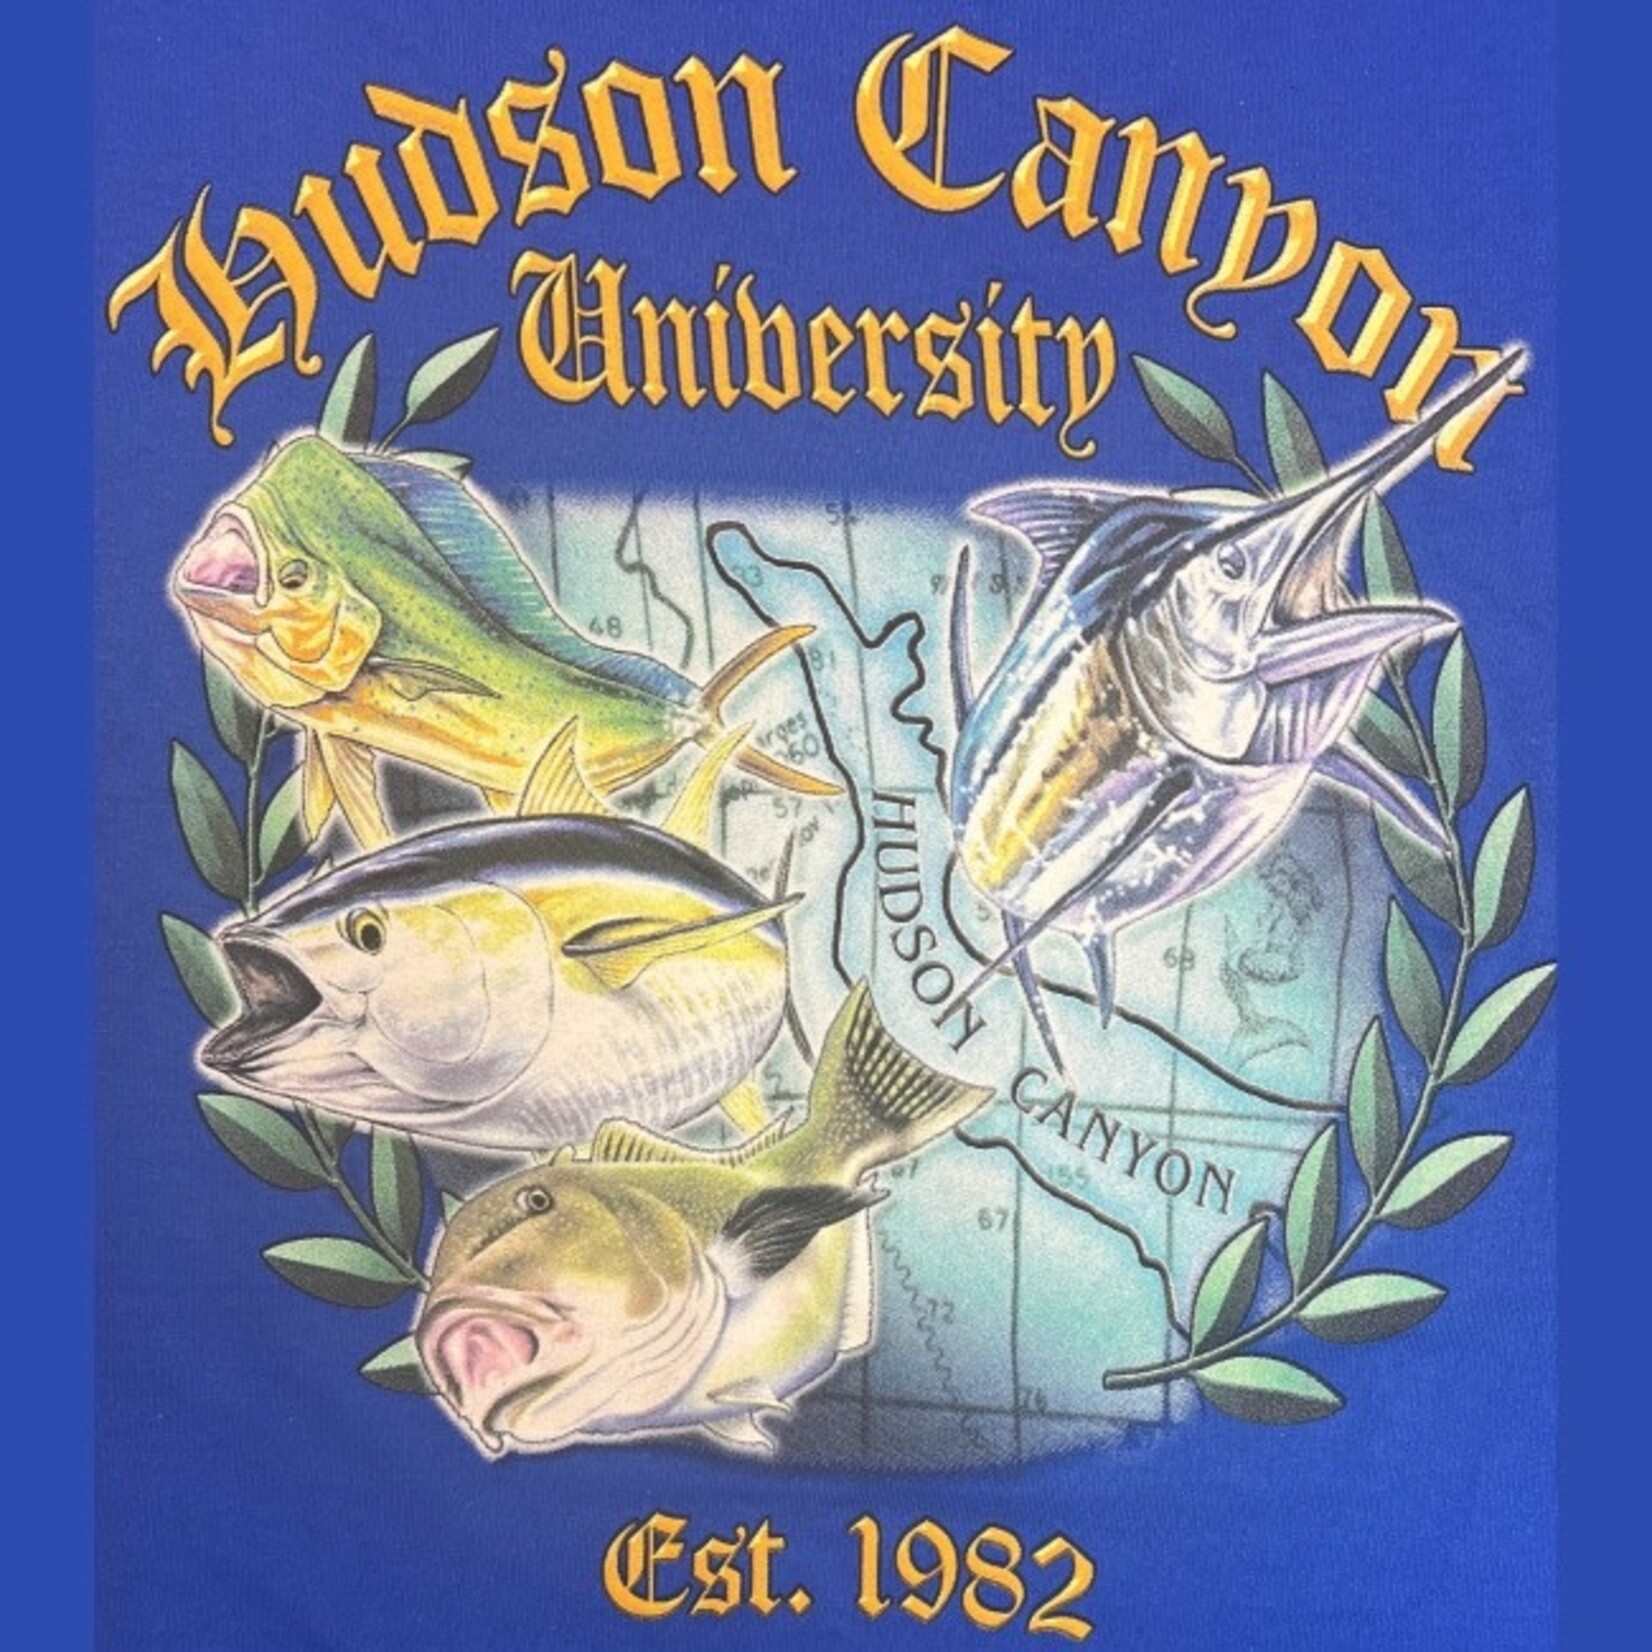 The Reel Seat hudson canyon university t-shirt